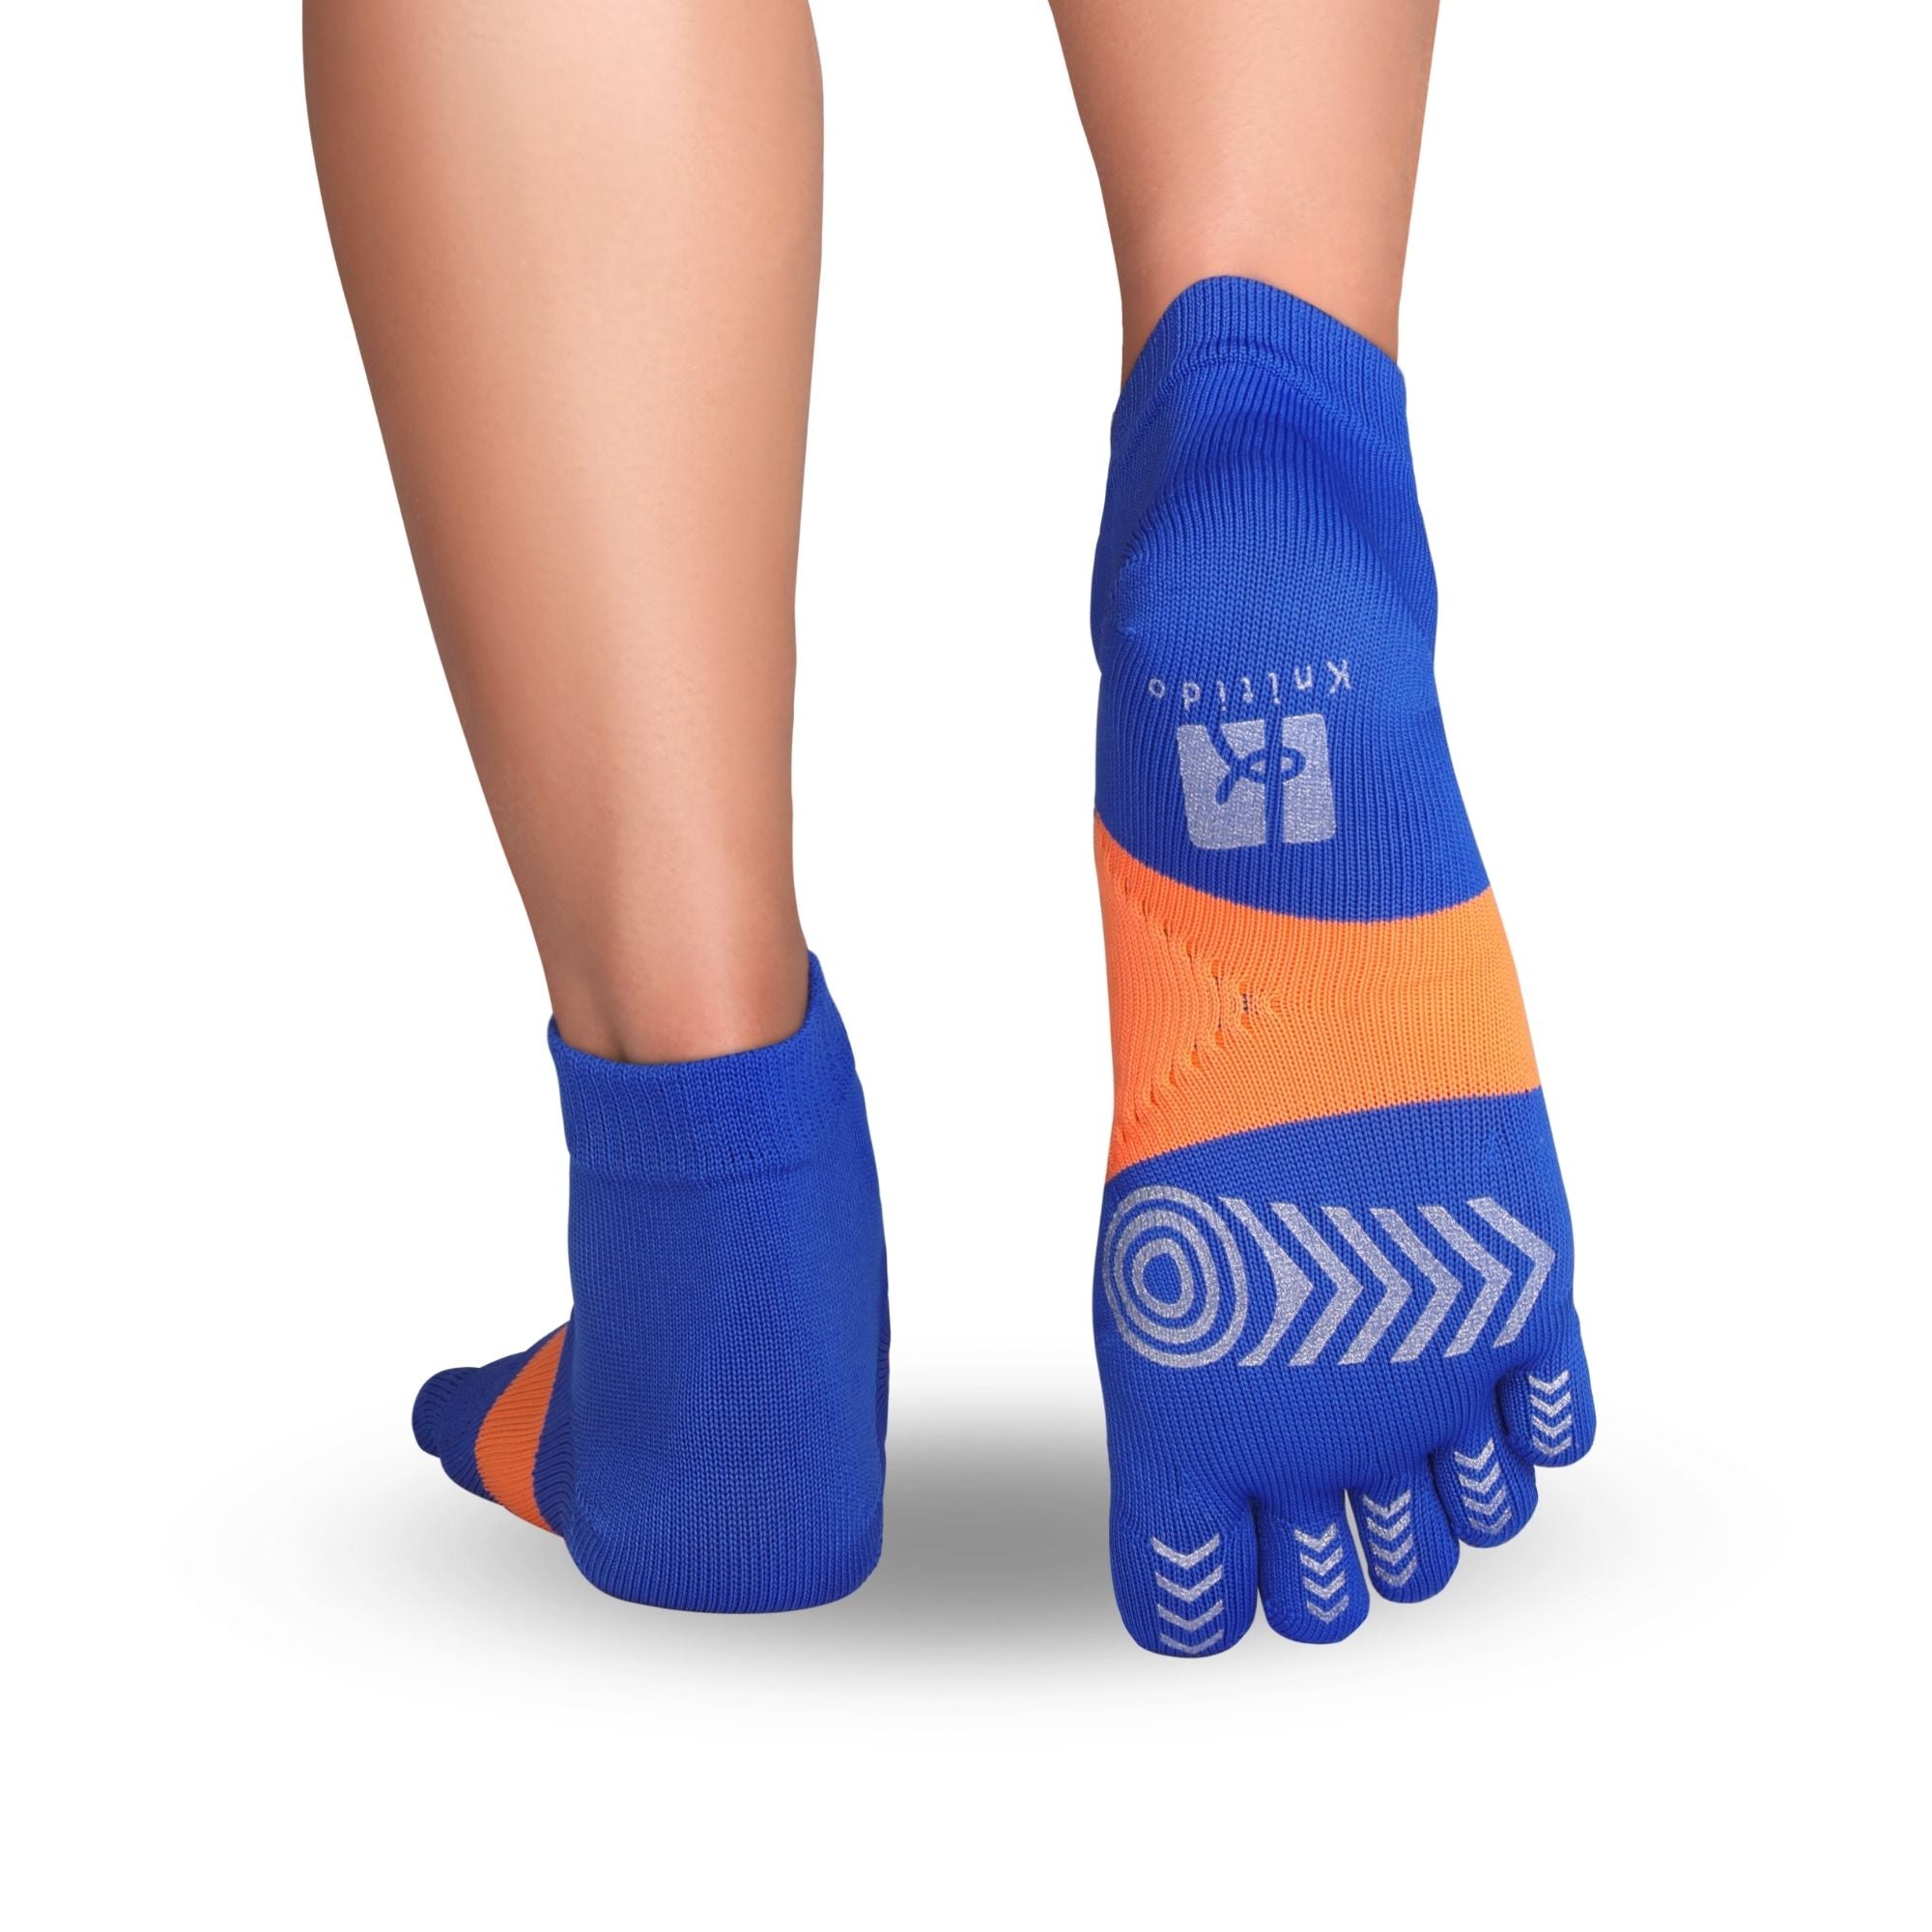 Knitido+ Toe Socks for Yoga, Pilates and more. 